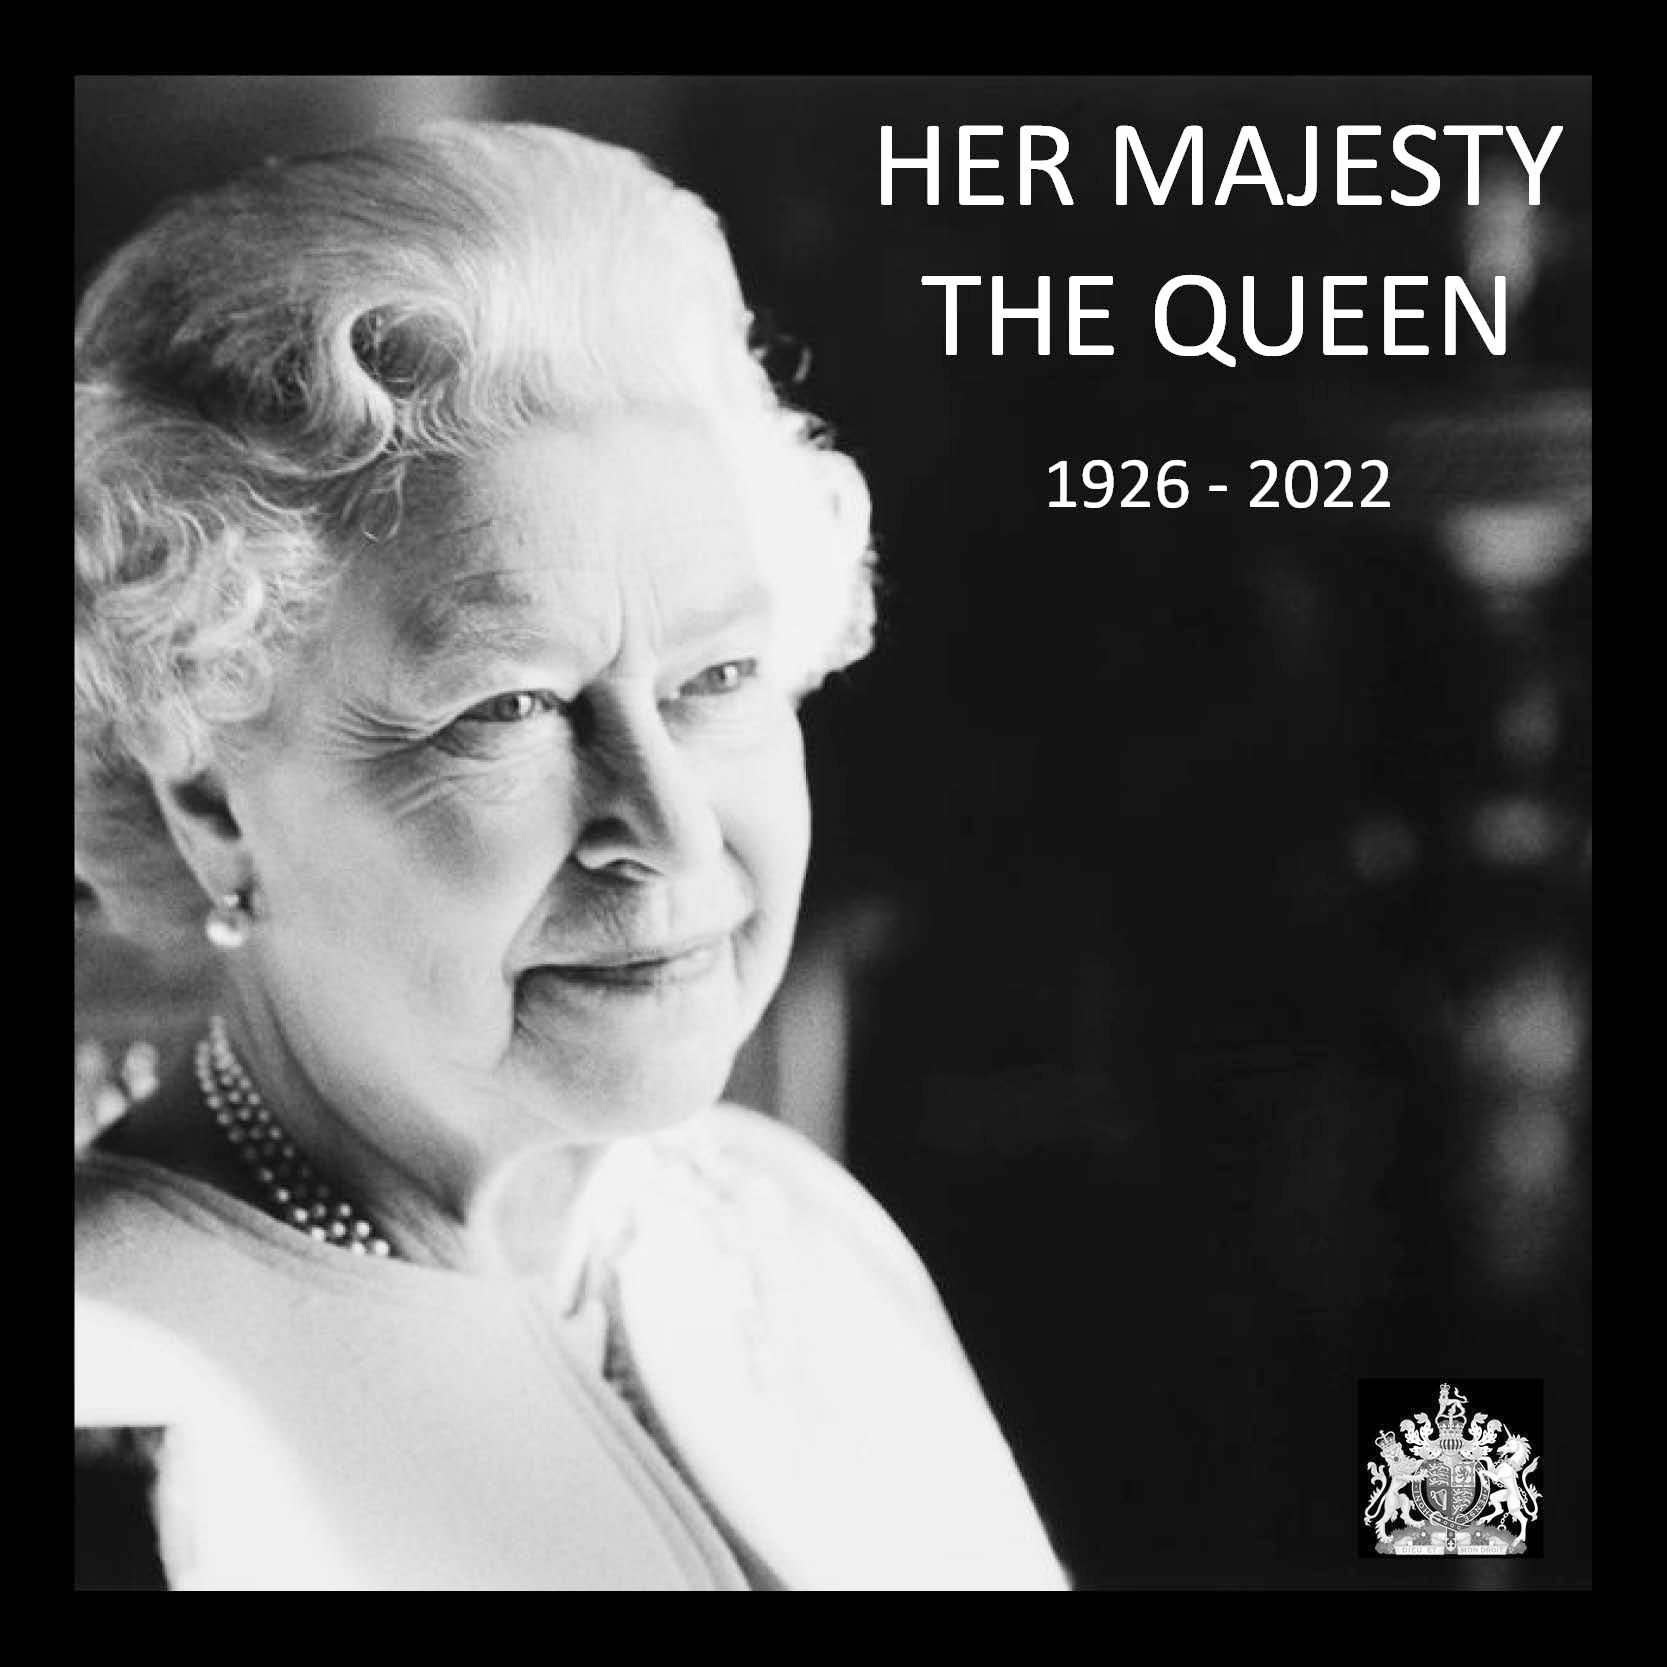 The passing of Queen Elizabeth ll